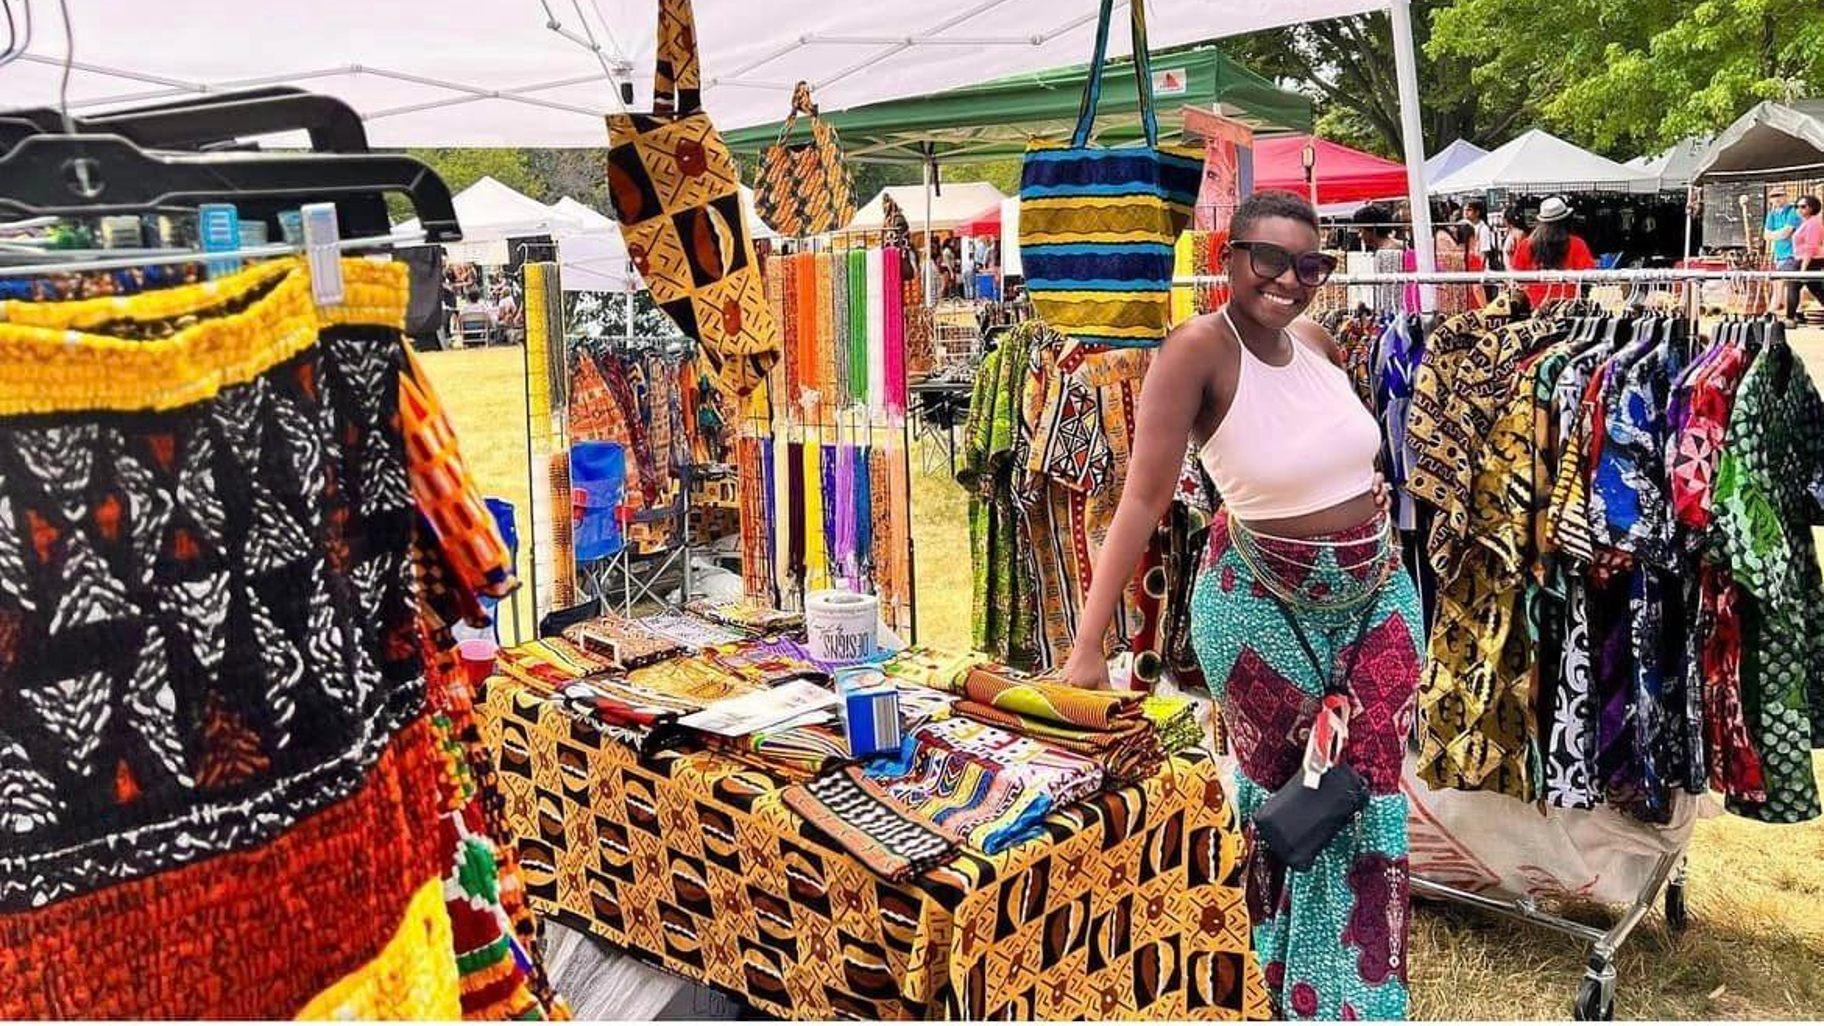 A Festival of Life vendor. (Felicia K. Apprey)